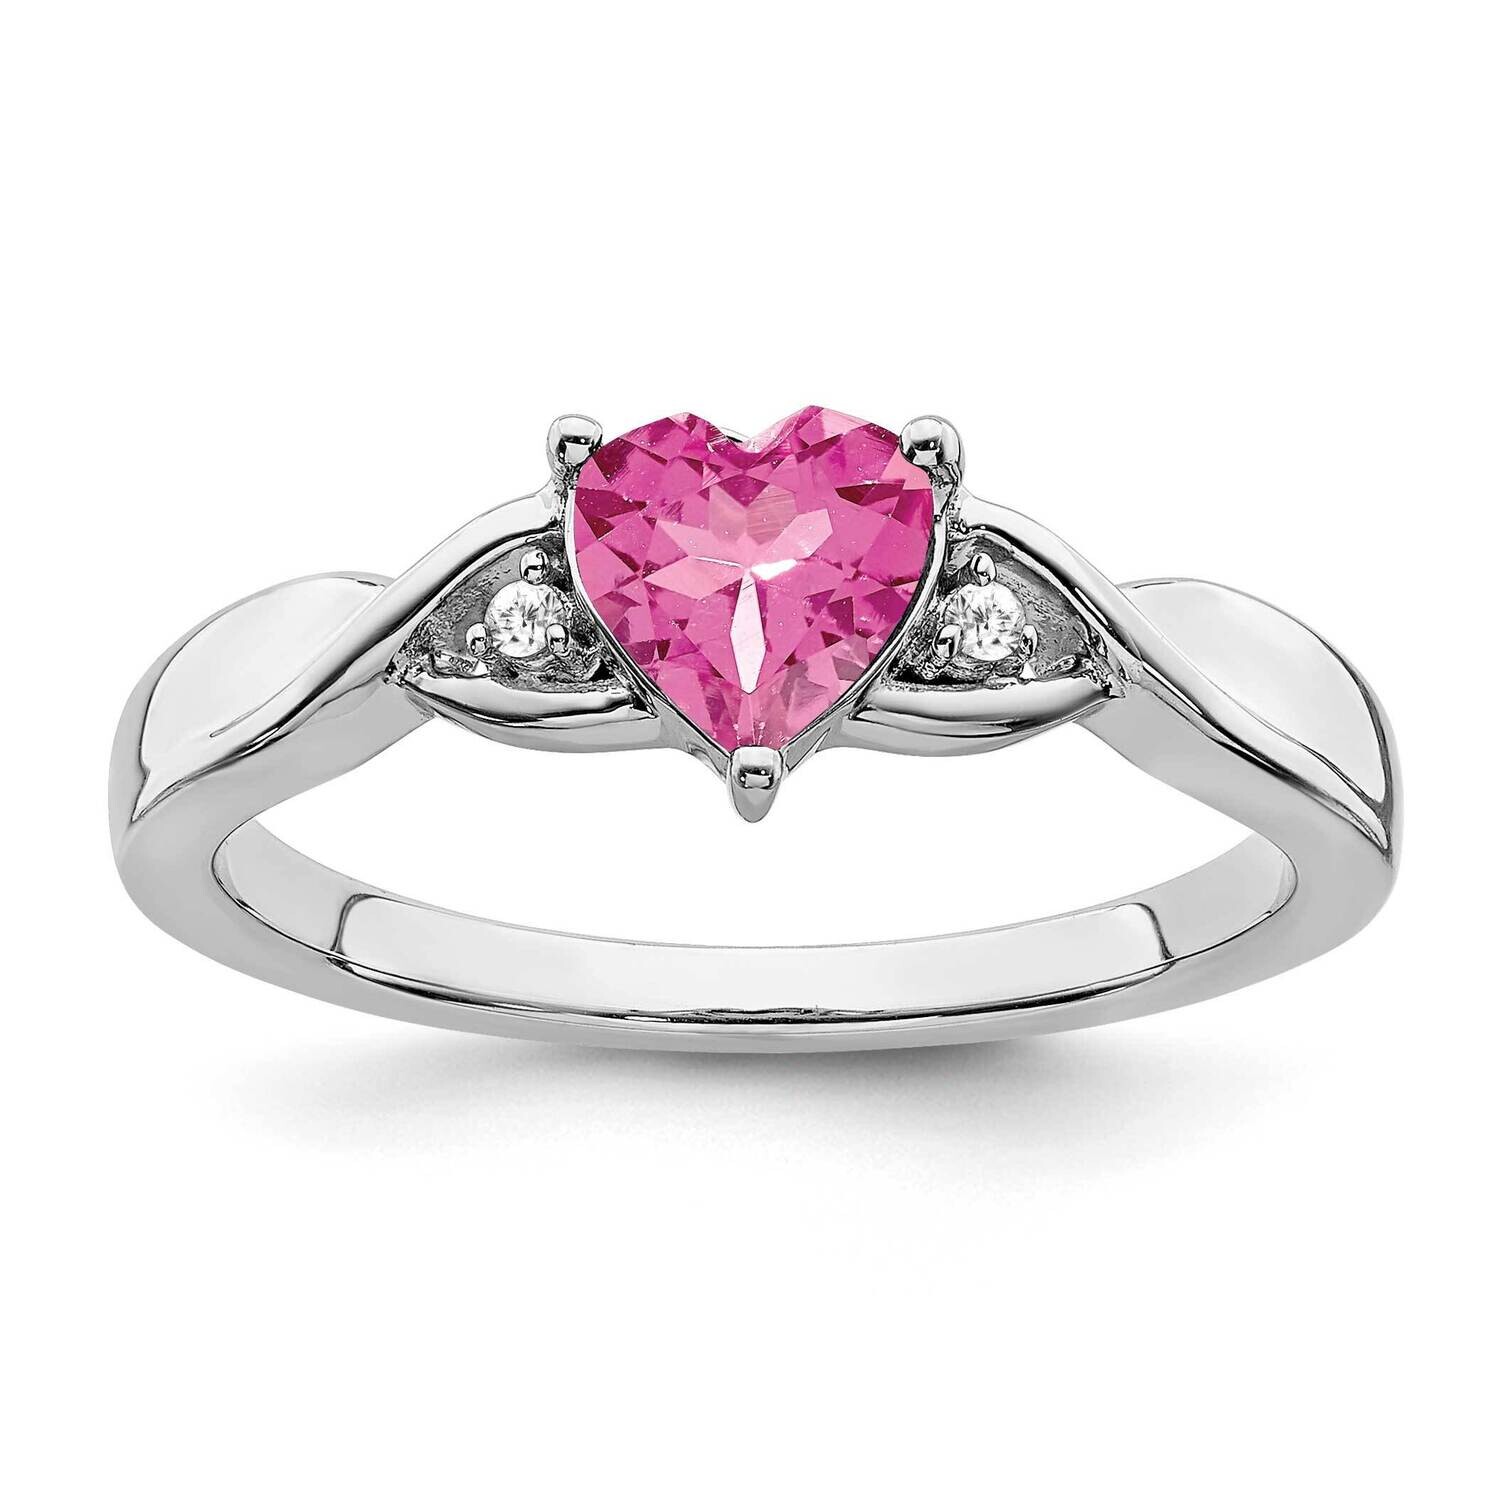 Pink Tourmaline Diamond Ring Sterling Silver Rhodium-Plated RM7413-PT-002-SSA